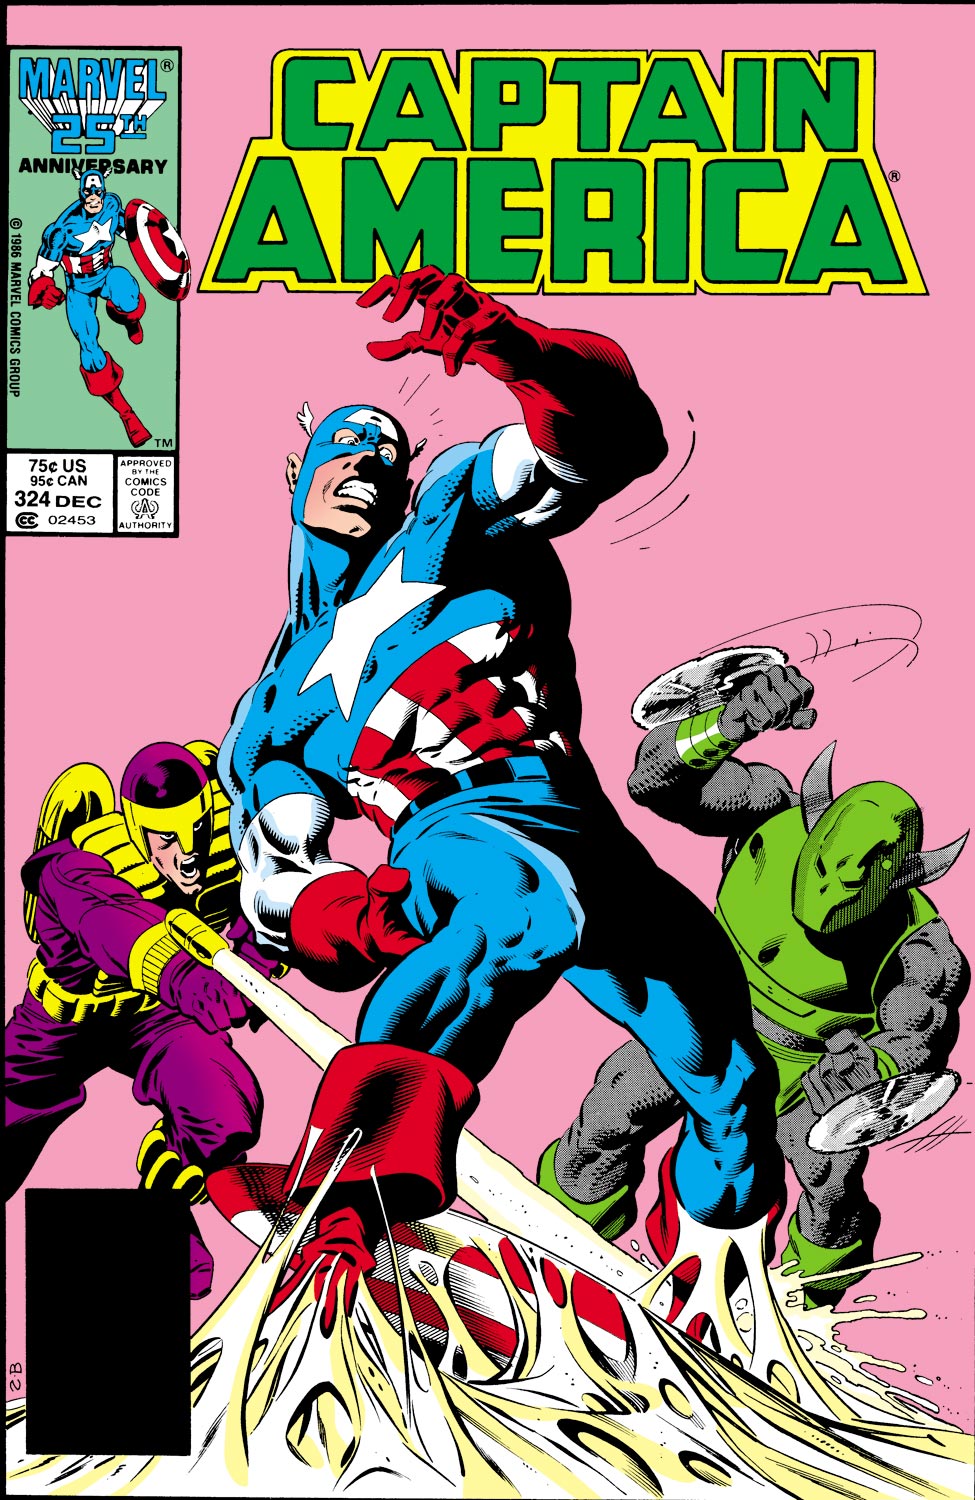 Captain America (1968-1996) #402 by Mark Gruenwald